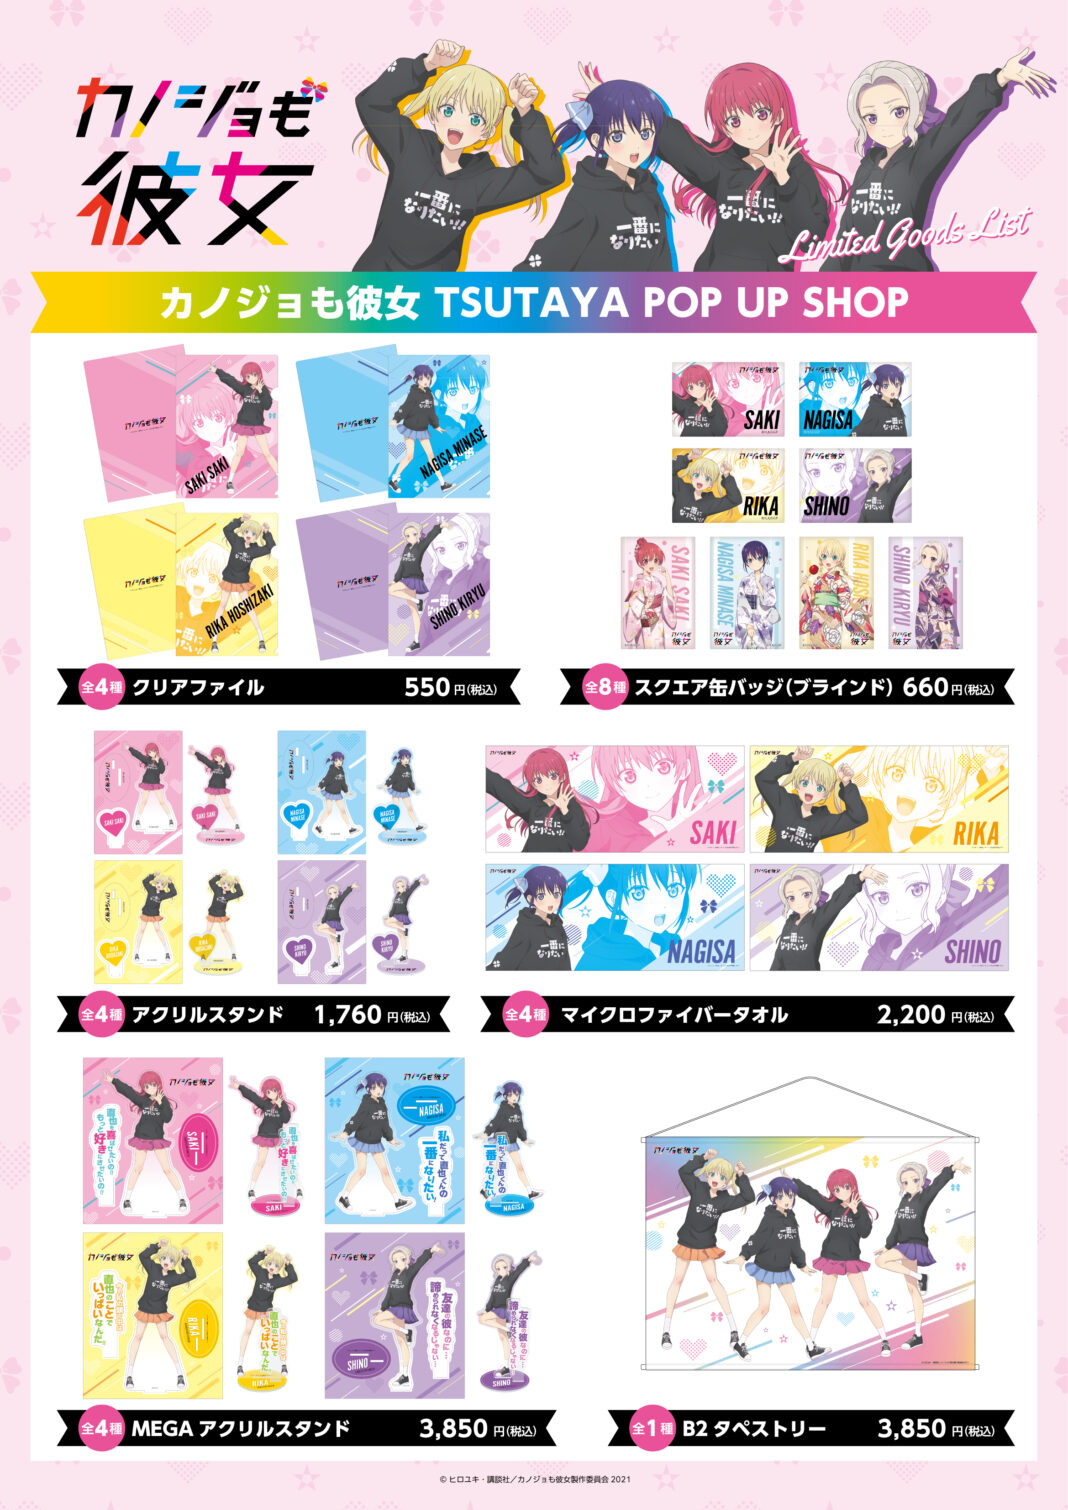 TVアニメが大好評放送中の『カノジョも彼女』 TSUTAYA限定POP UP SHOPにて、描き下ろしを使用したグッズを販売！のメイン画像